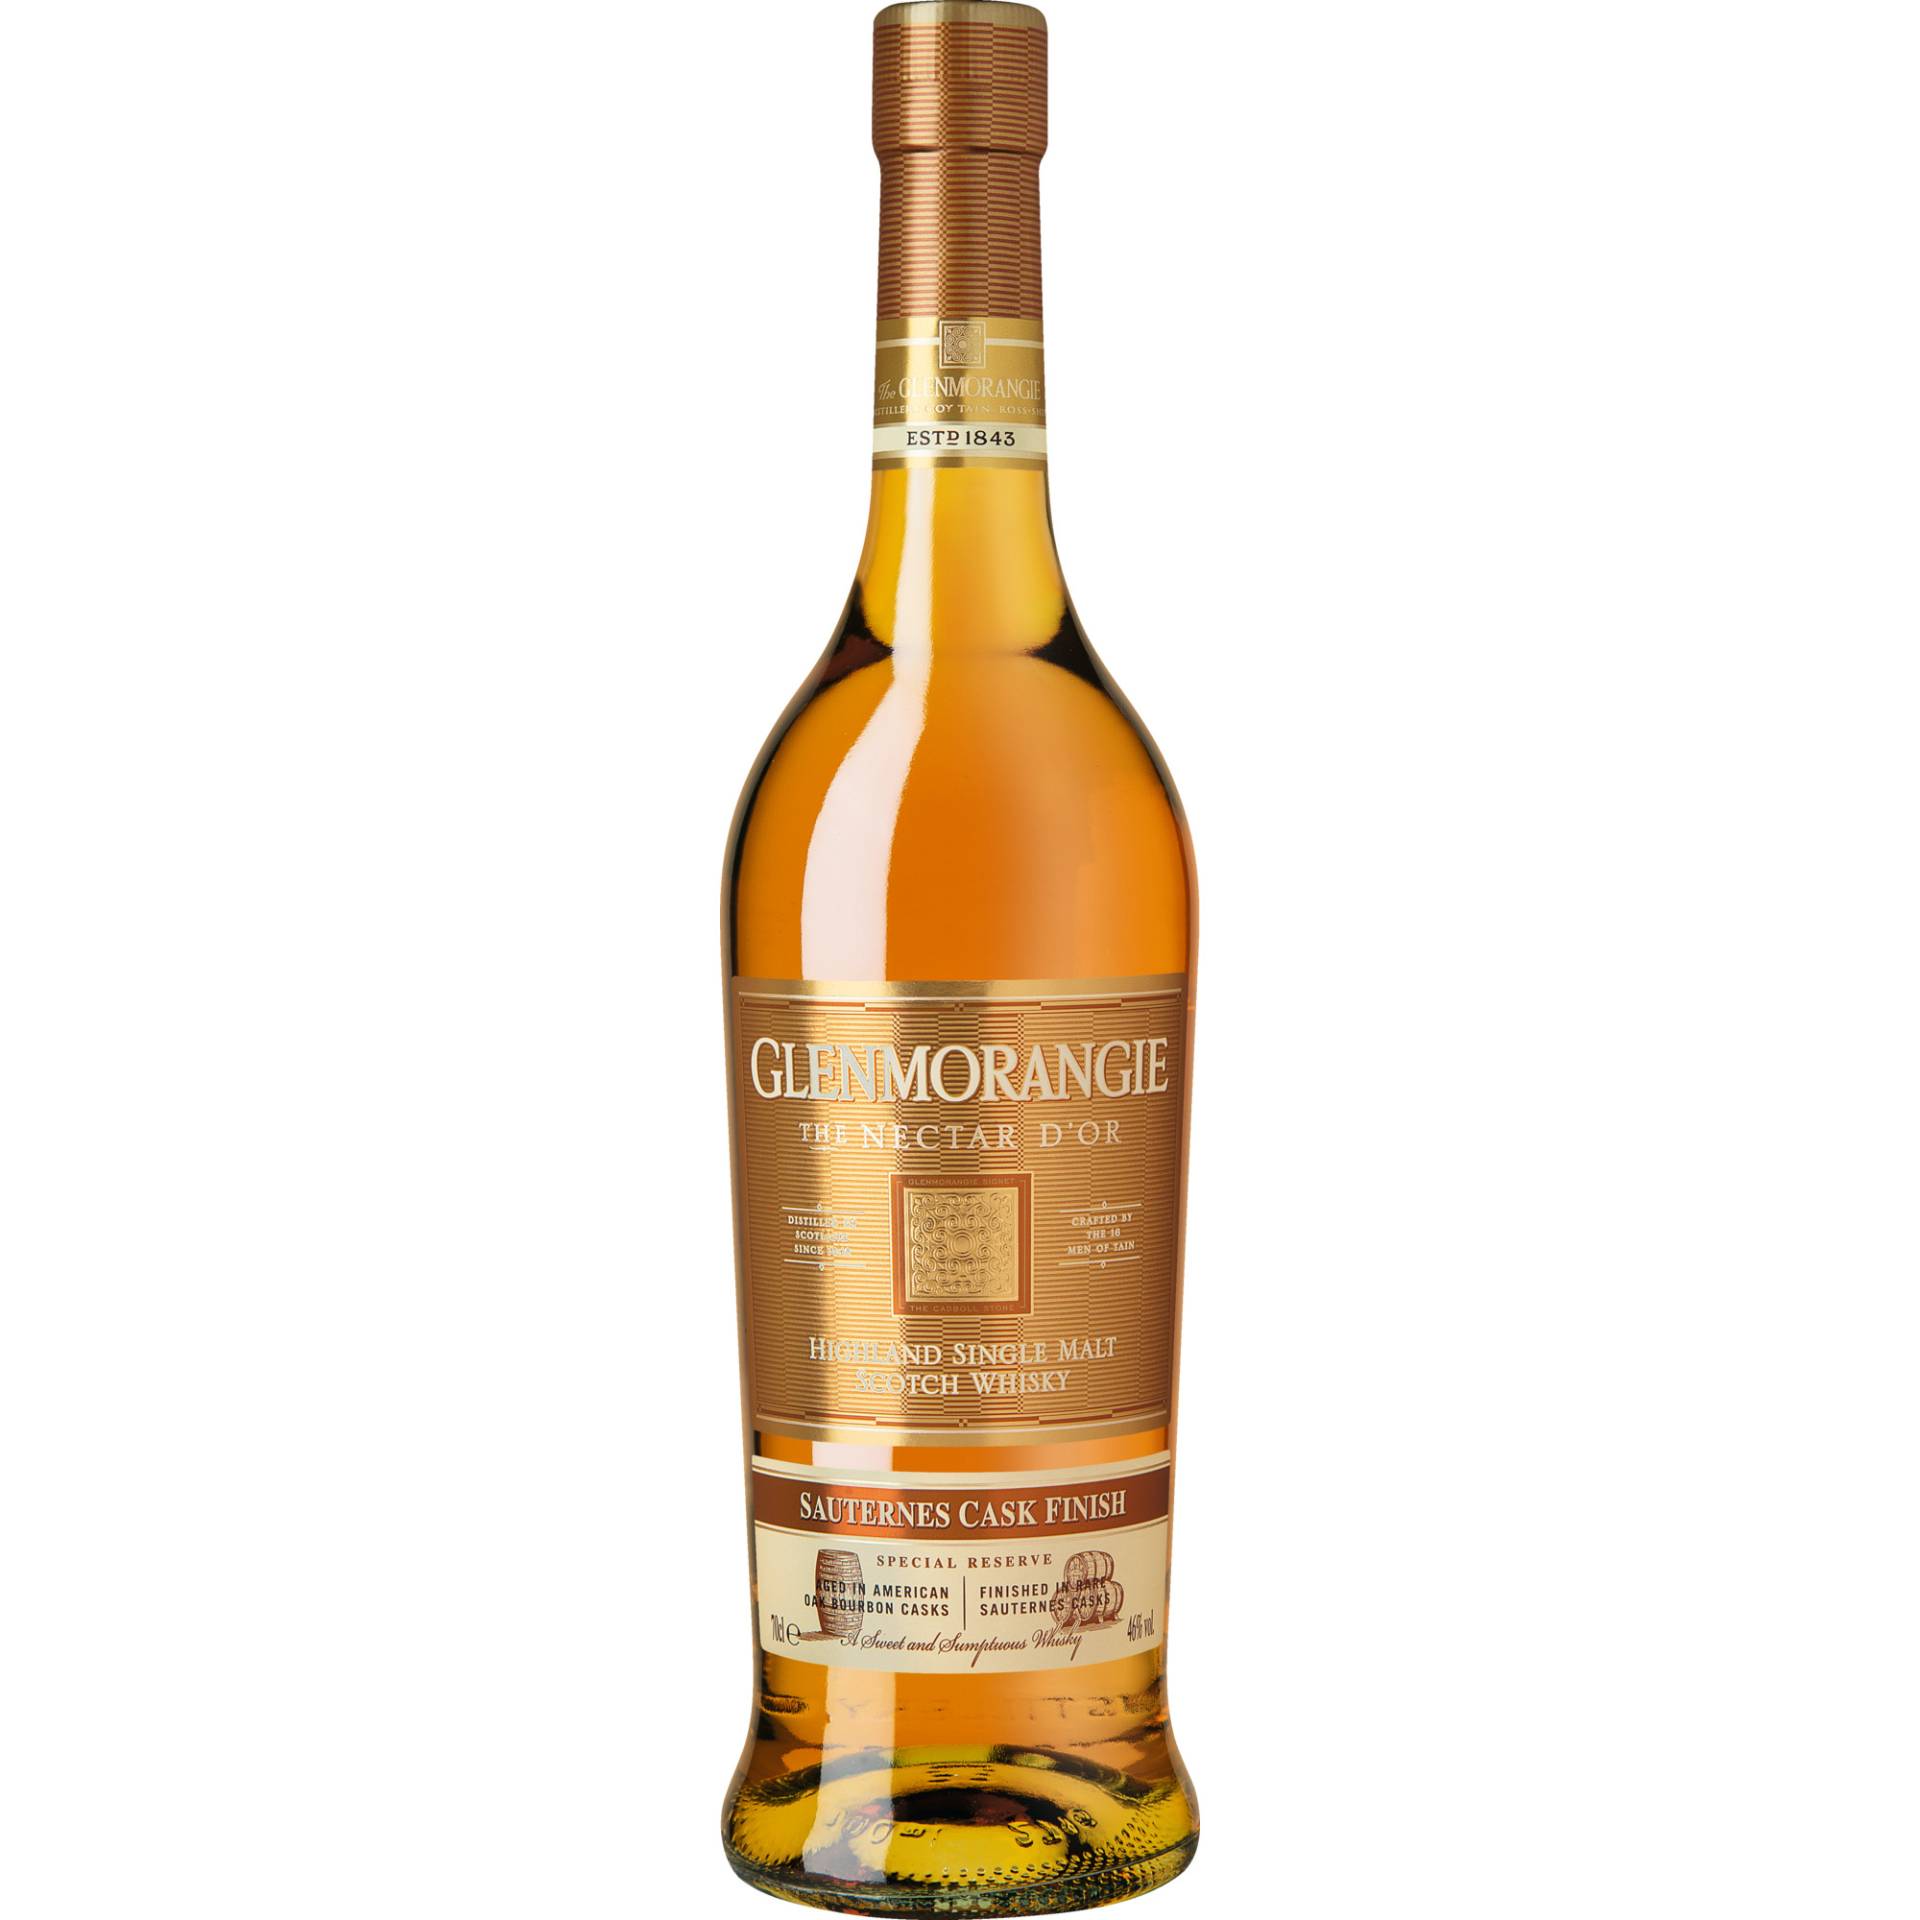 Glenmorangie Nectar d'Or Sauternes Cask Finish, Highland Single Malt Whisky, 0,7 L, 46,0% Vol., Schottland, Spirituosen von The Glenmorangie Distillery Coy Tain, Ross-Shire, UK